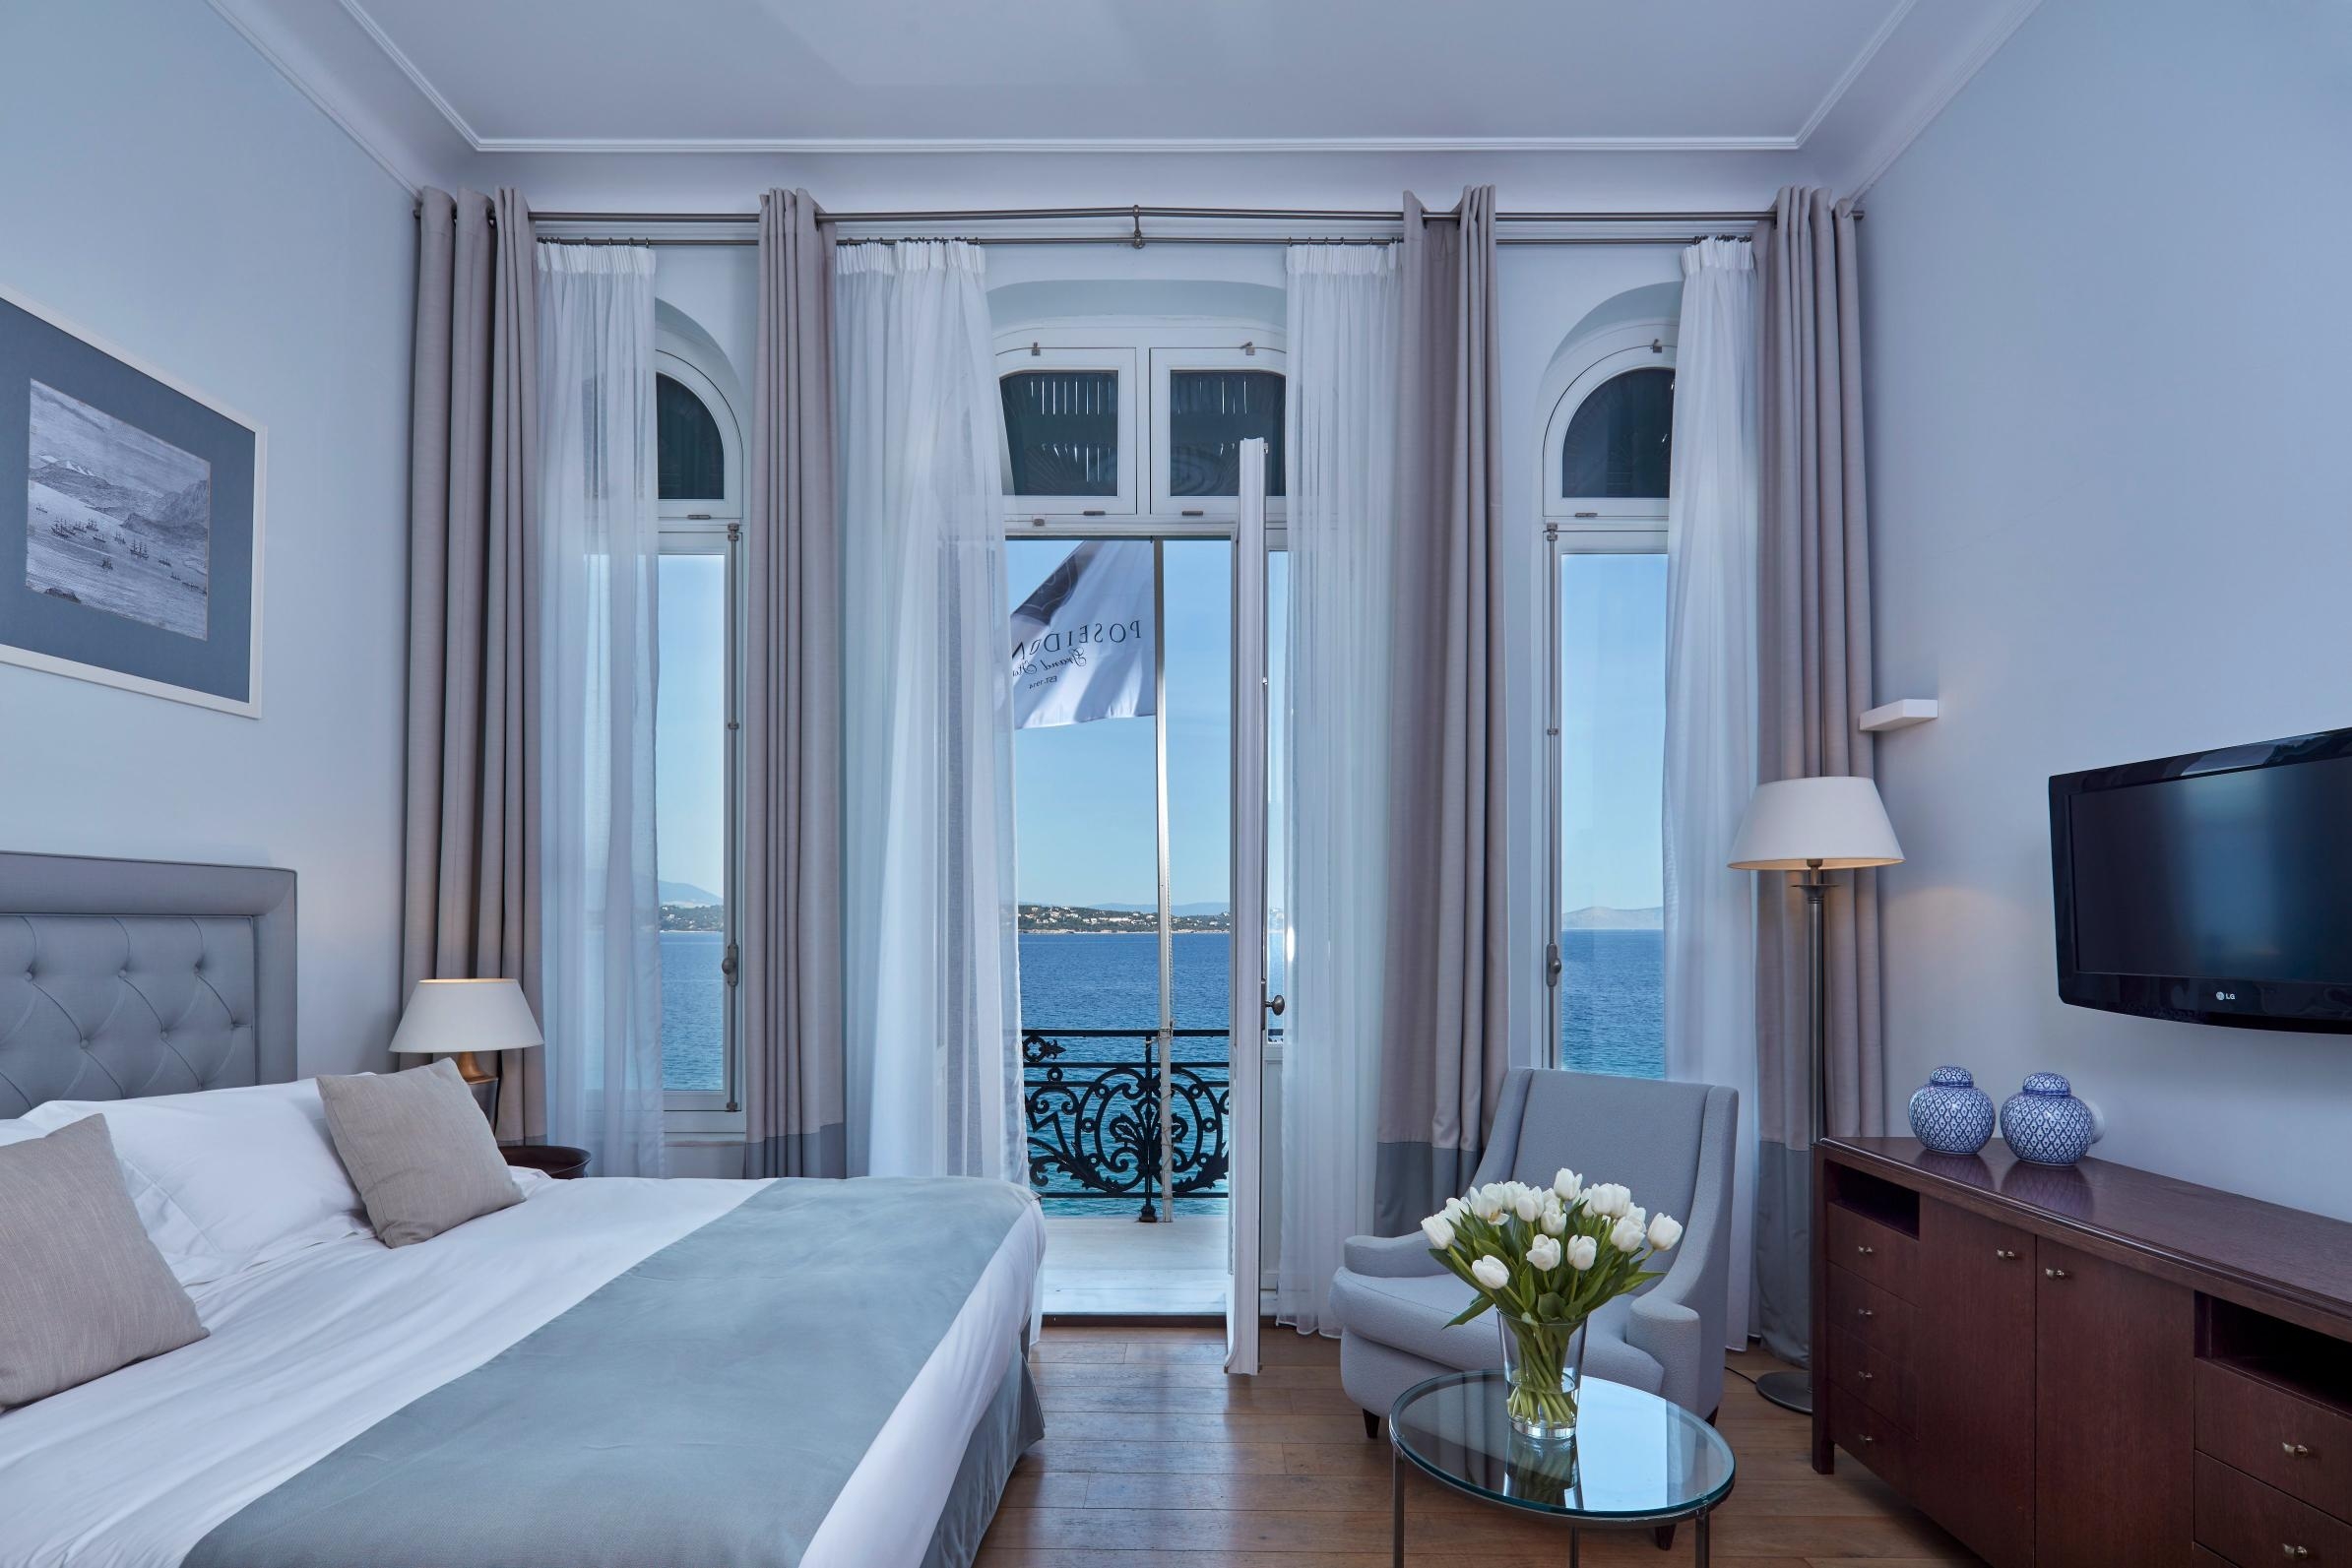 Poseidonion Grand Hotel marks 110 years of timeless elegance.